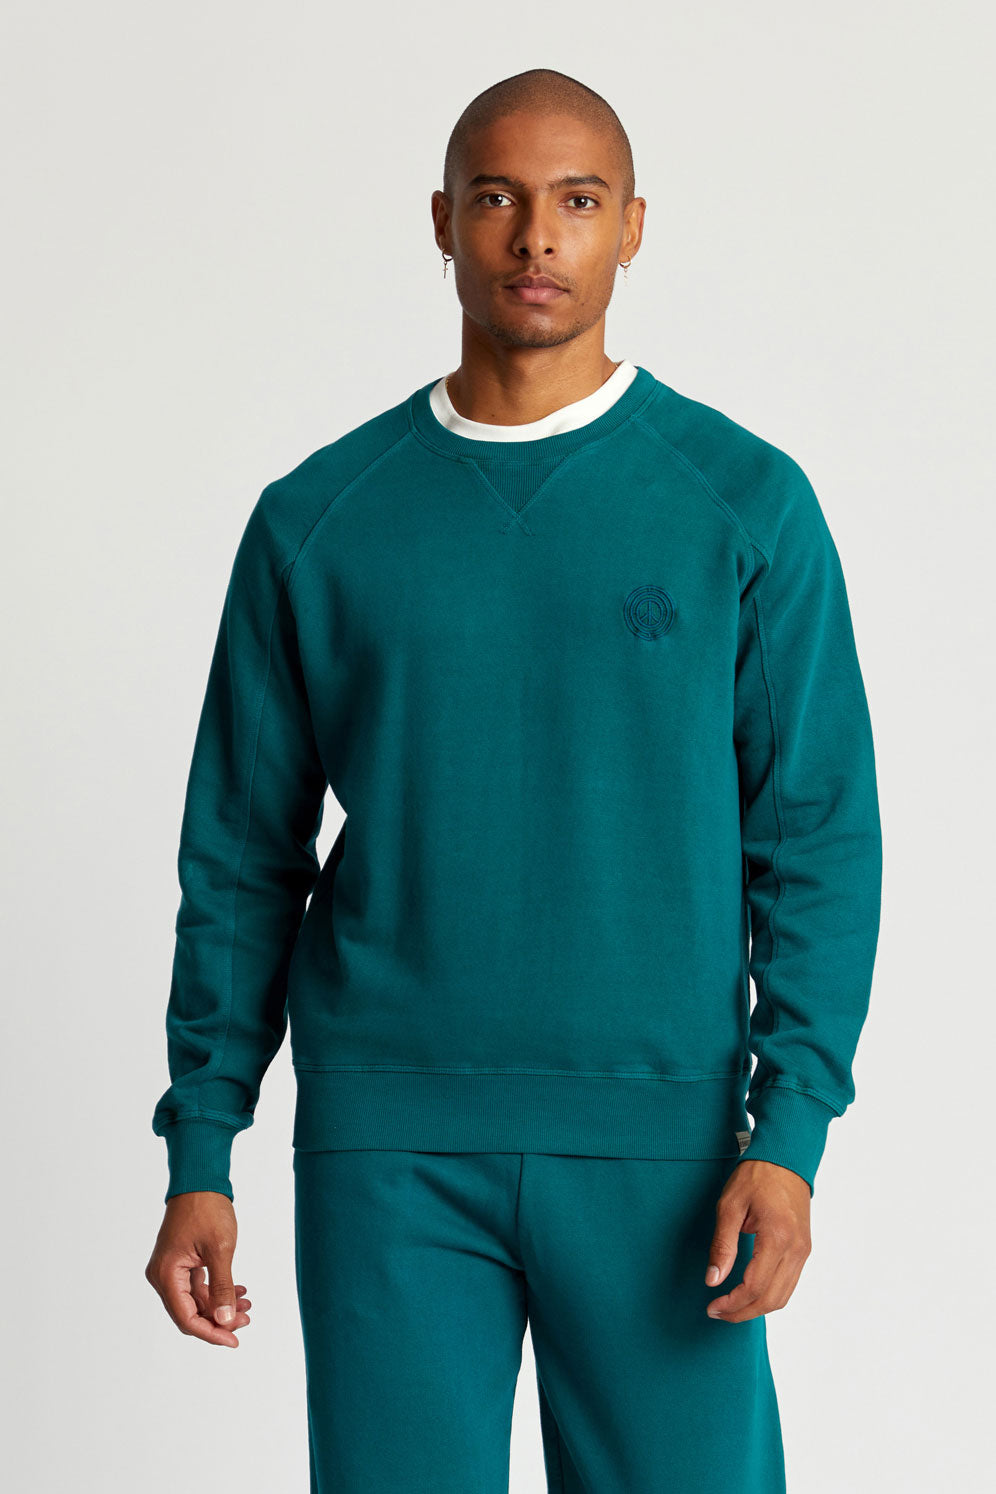 Dark green sweater ANTON made of organic cotton by Komodo